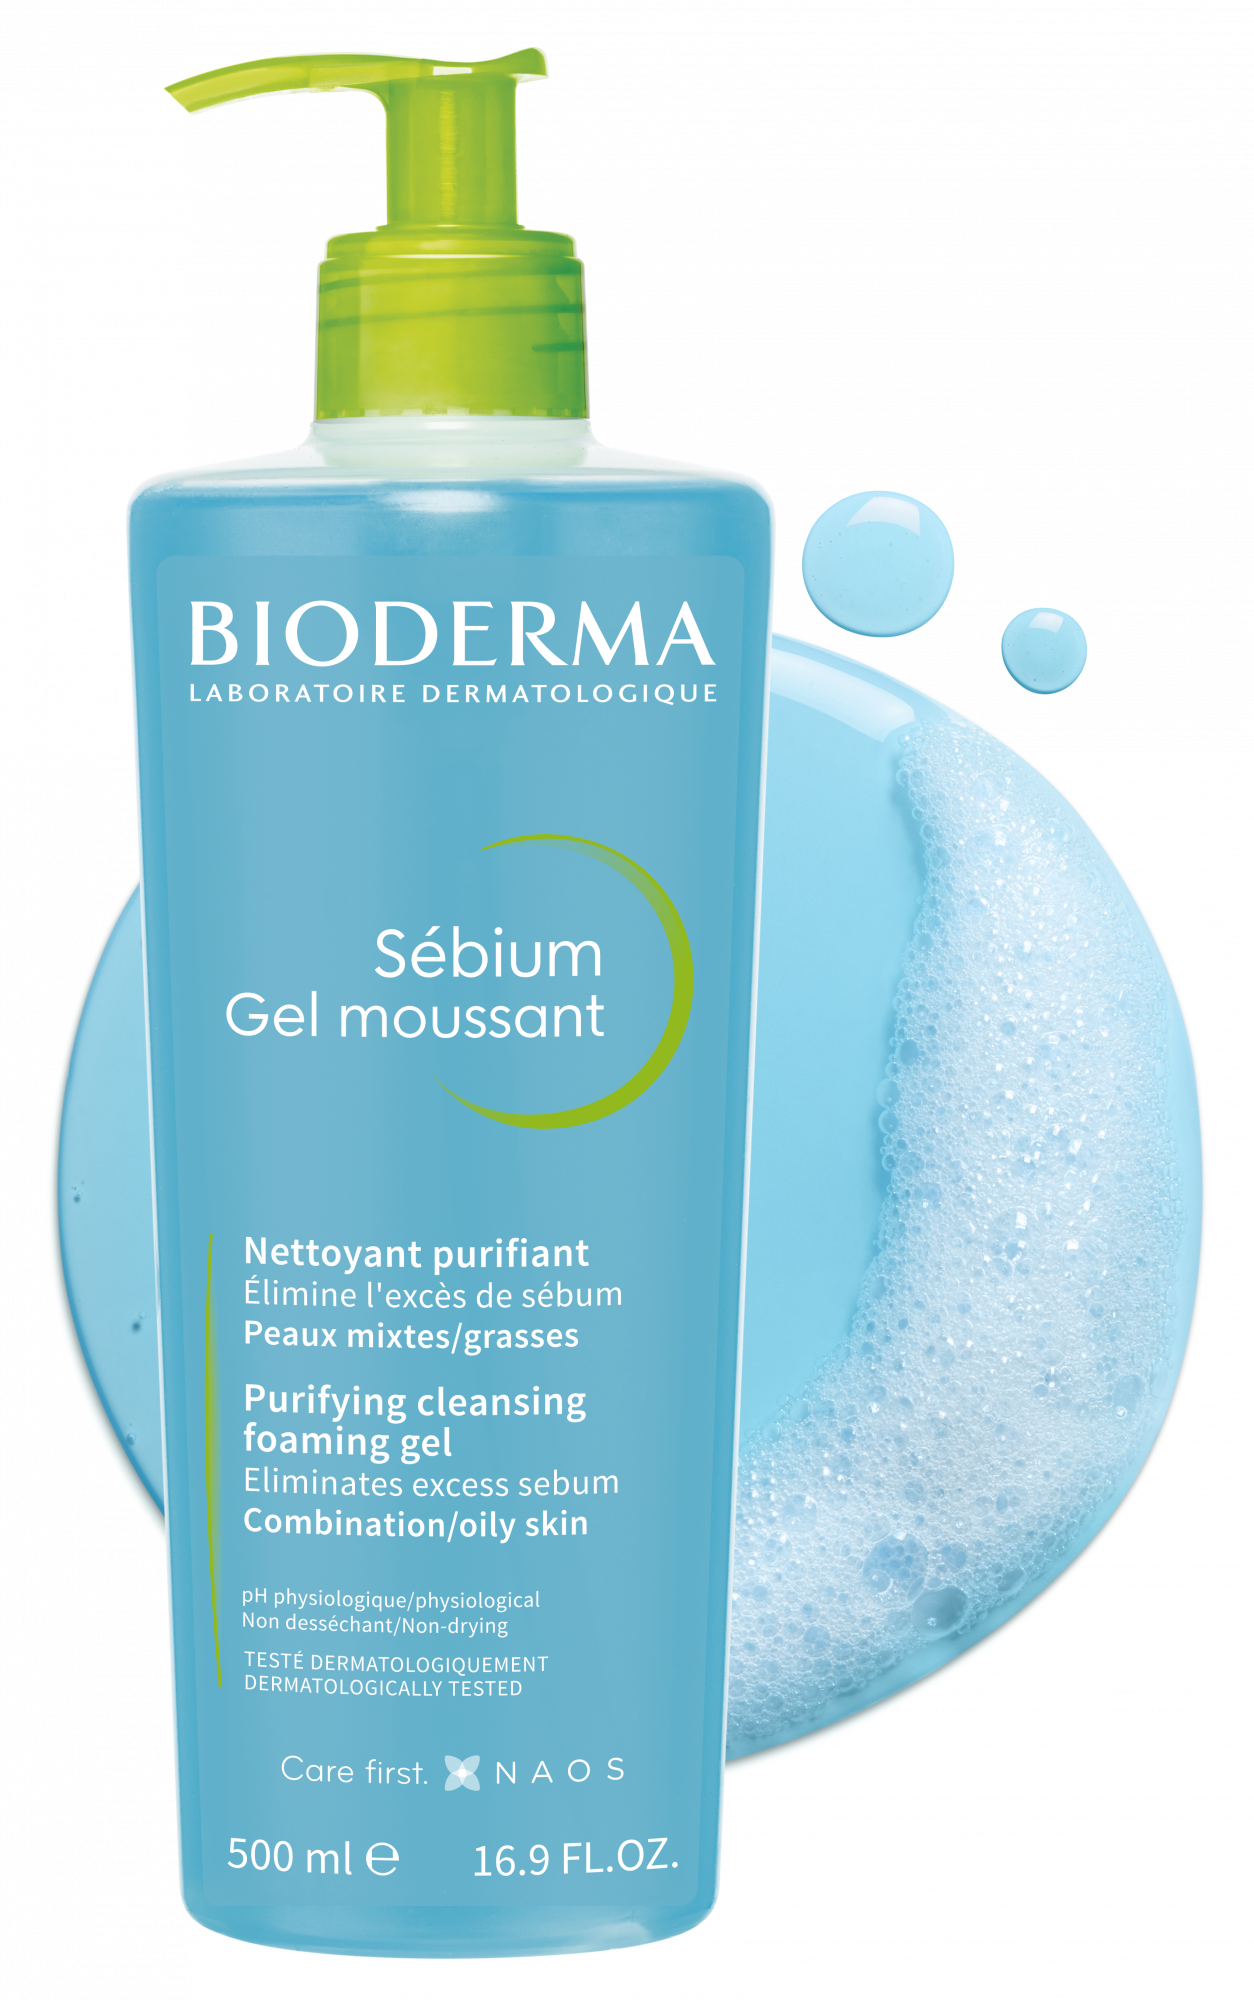 Bioderma Pigmentbio Foaming Cream 500ml (16.9 fl oz)